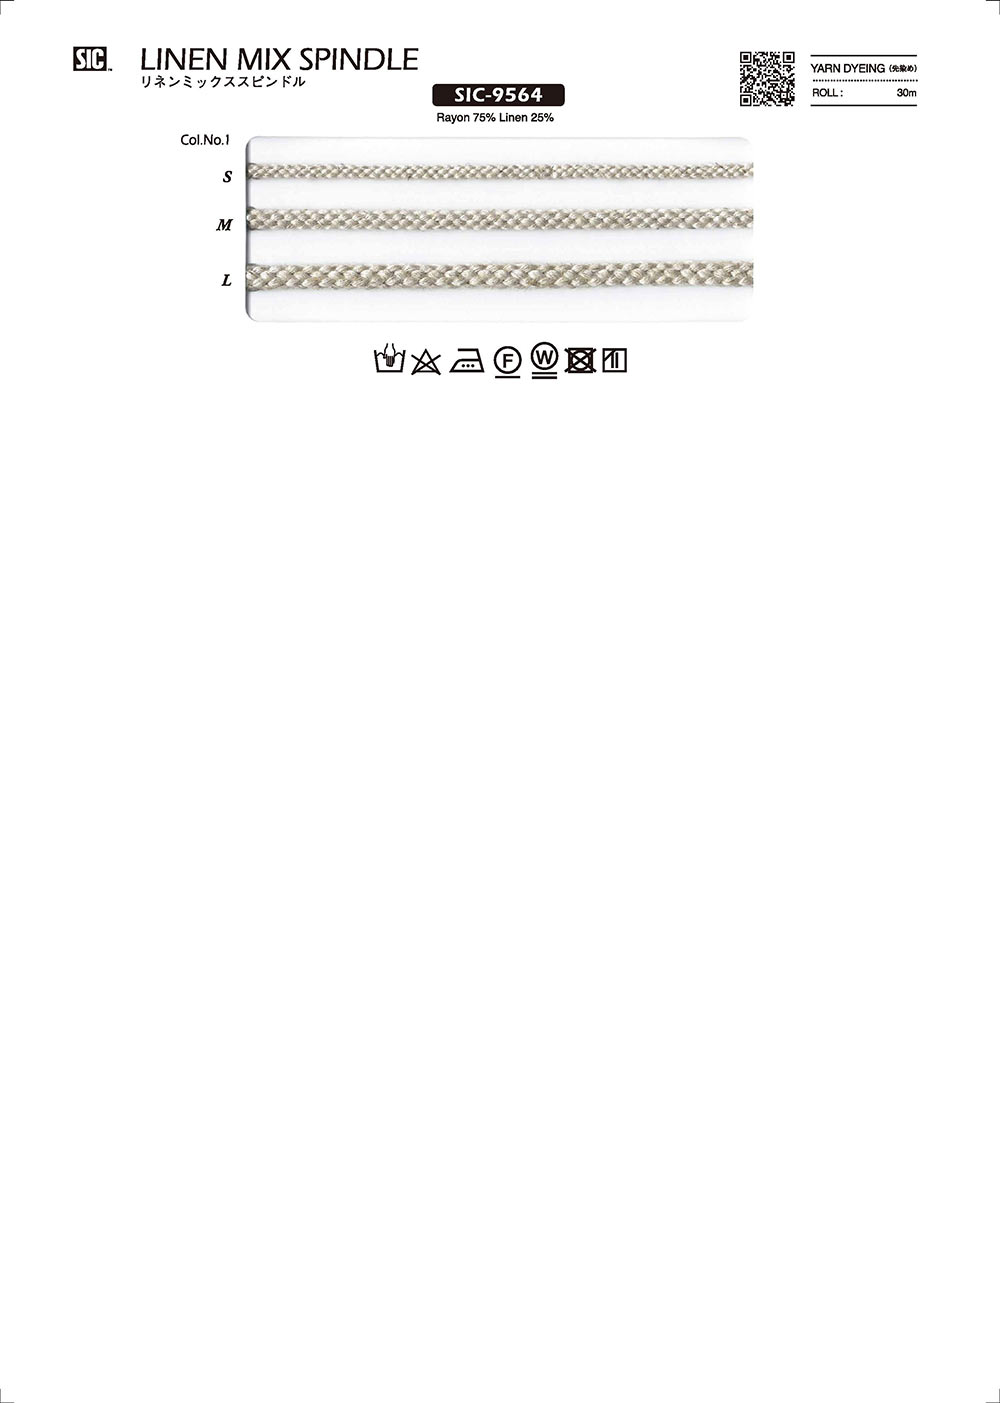 SIC-9564 린넨 믹스 스핀들[리본 테이프 코드] SHINDO(SIC)